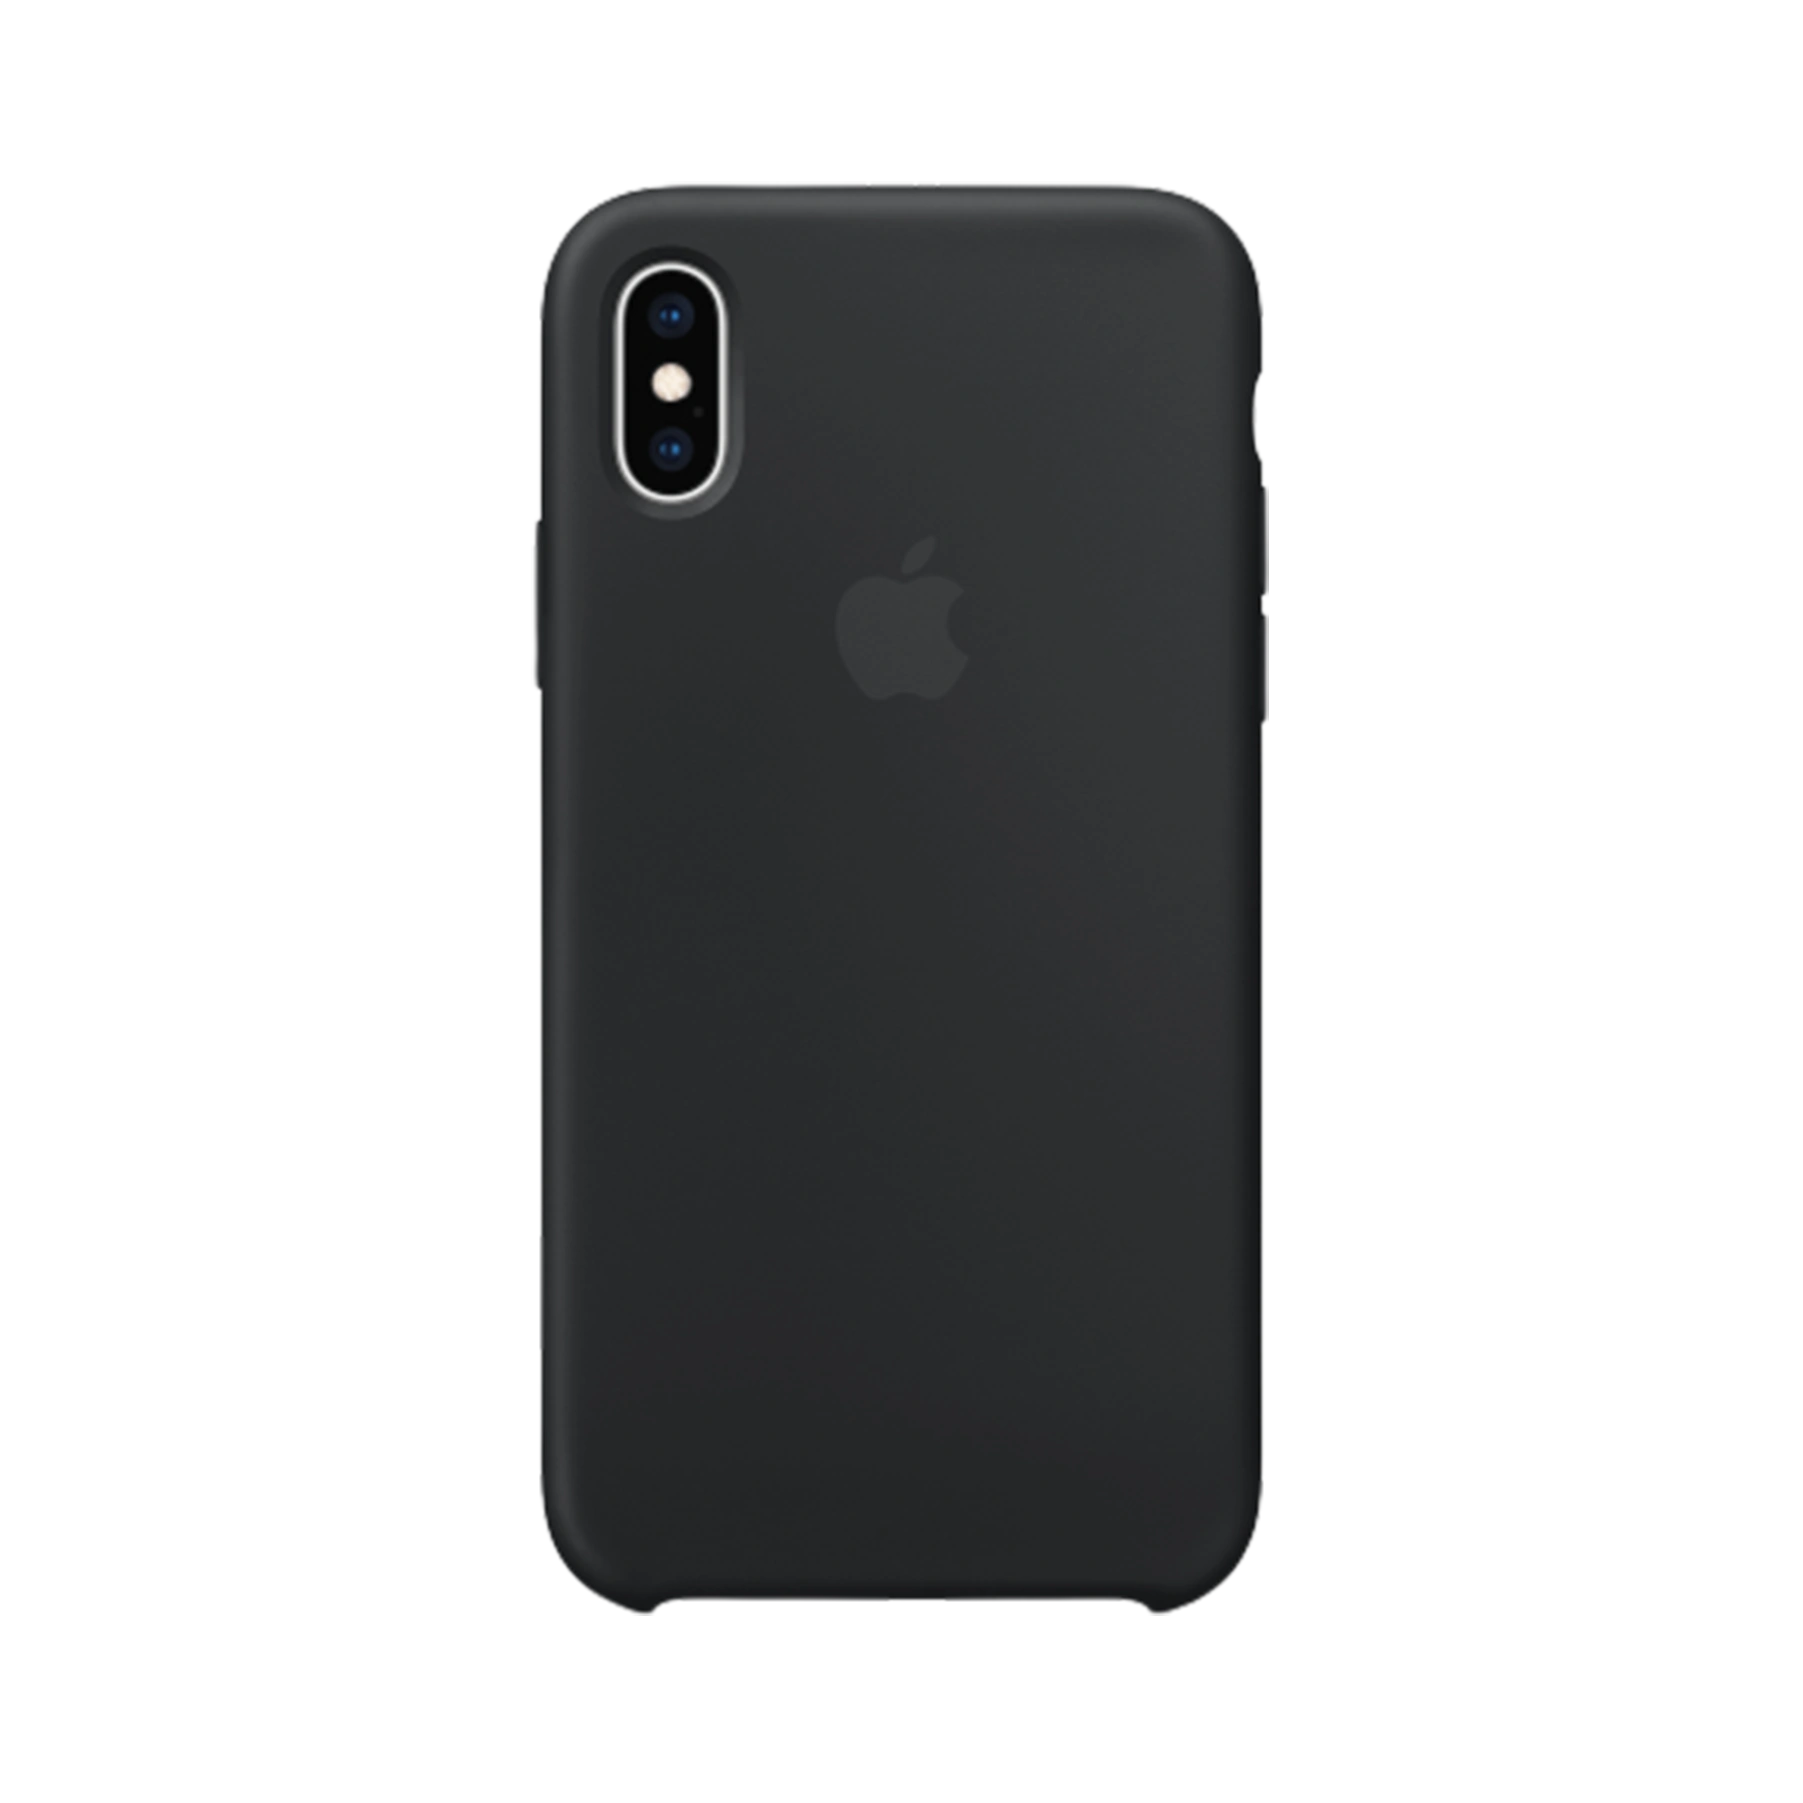 HC iPhone X Silicone Case